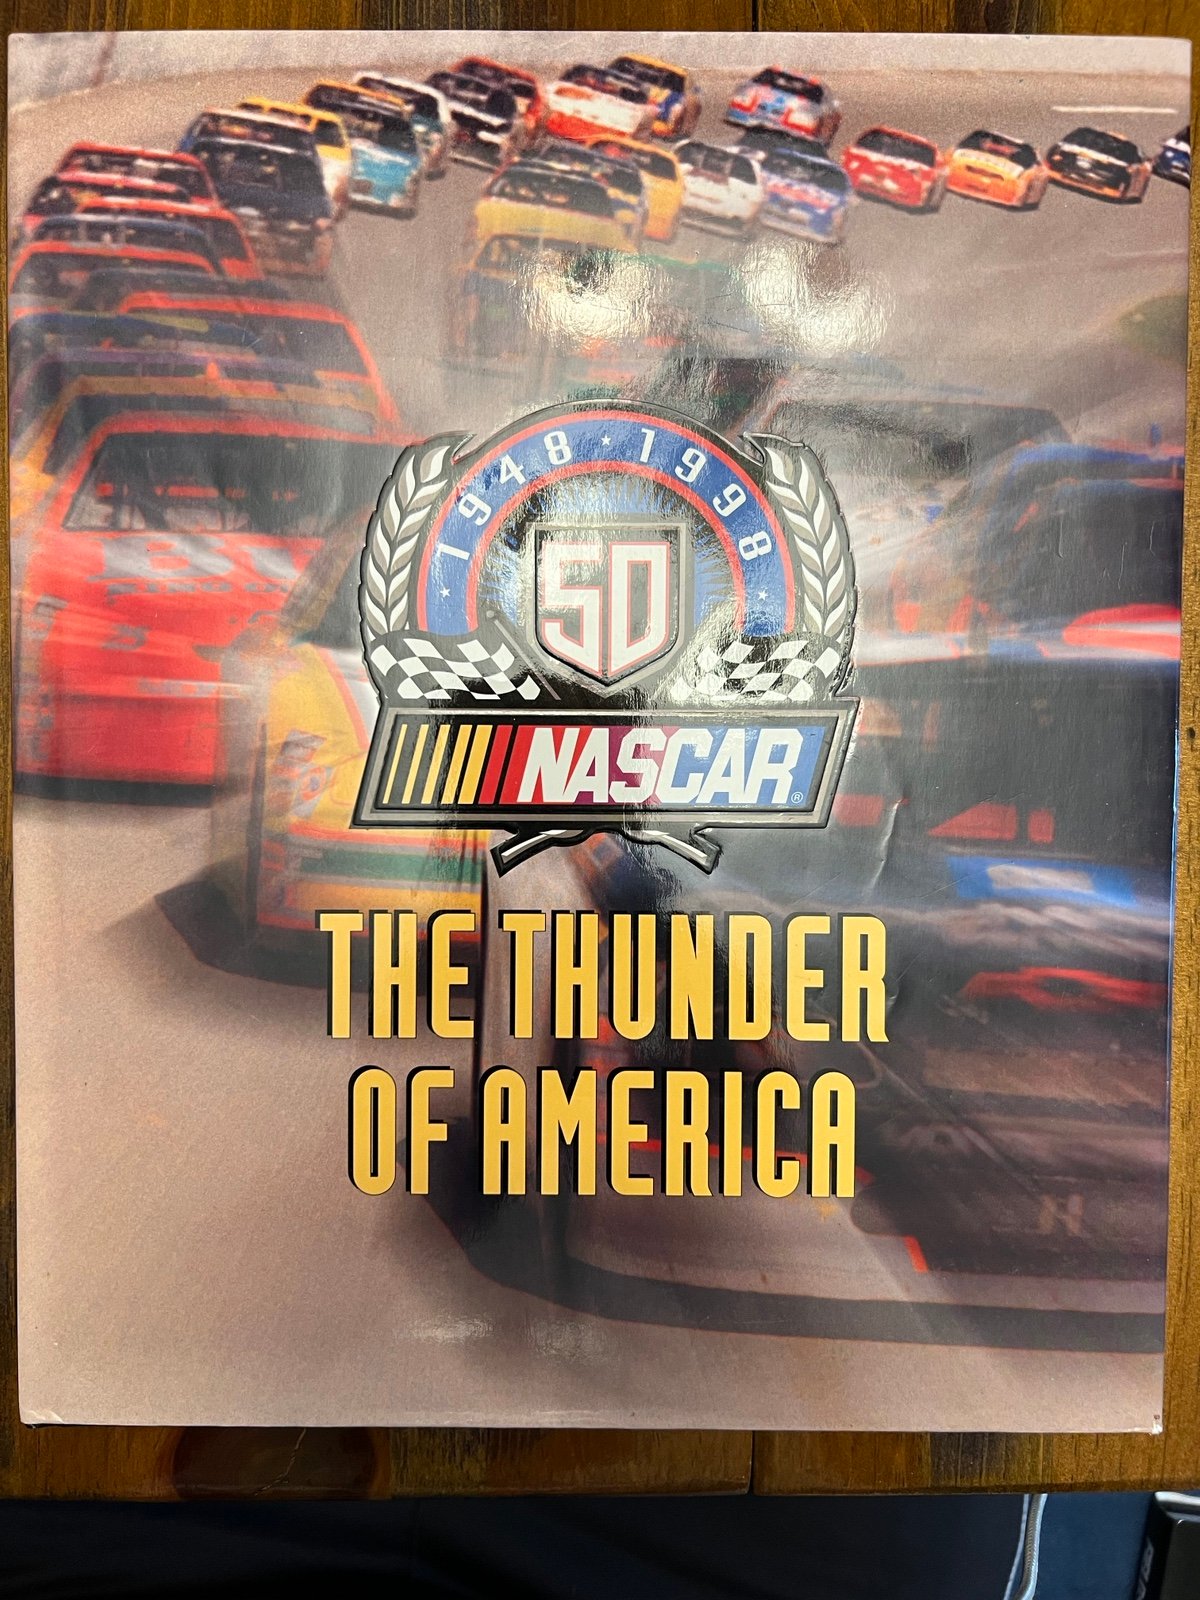 NASCAR “The Thunder of America” 50th Anniversary “ Coffee Table Book kfrMMJHJh